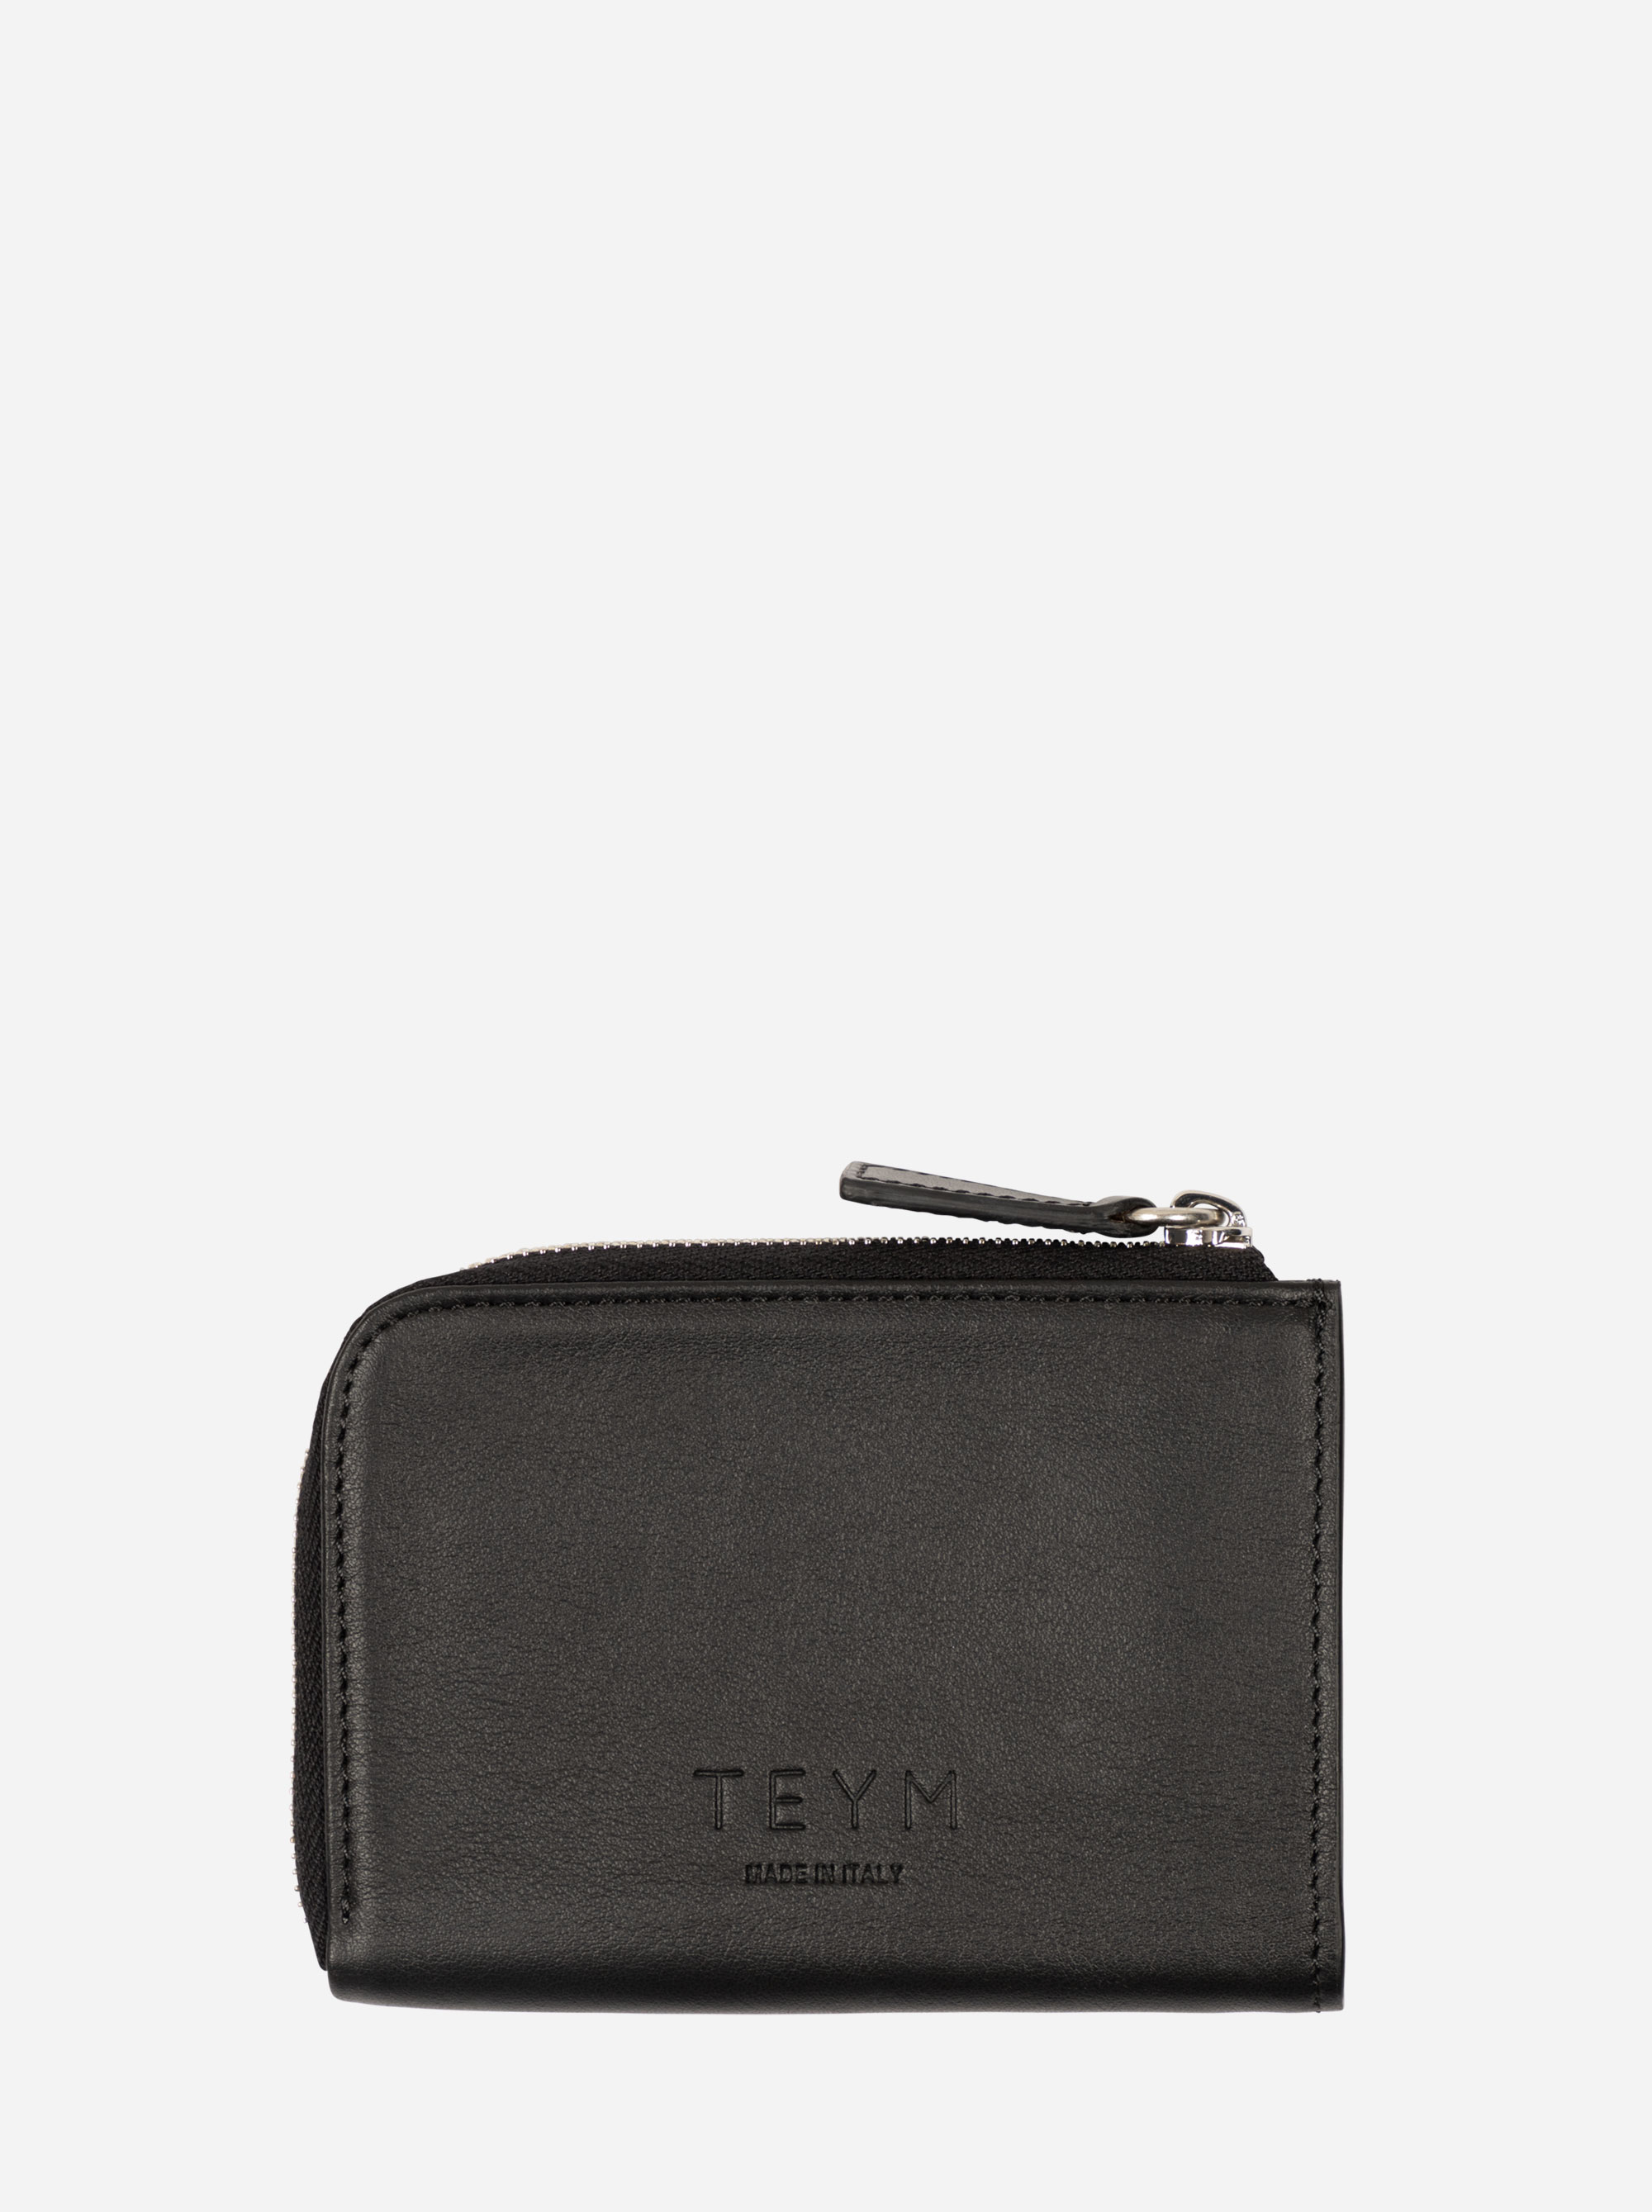 Teym - The Wallet - Black - 2